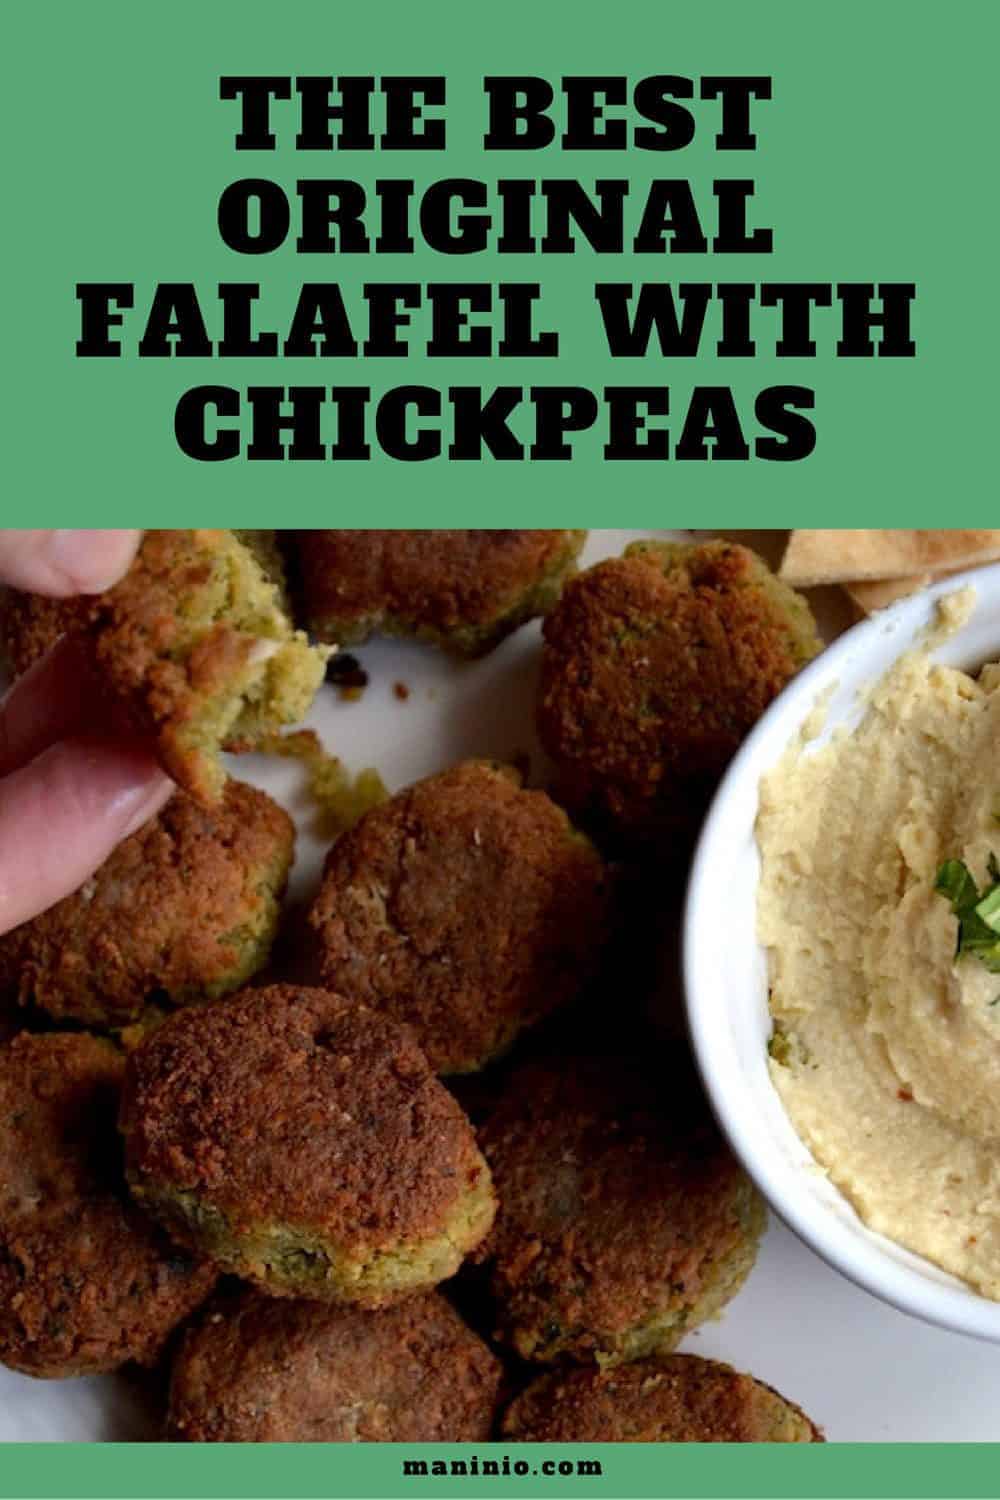 TΑυθεντικό Φαλάφελ με ρεβίθια | Μέση Ανατολή, Vegan και Χωρίς Γλουτένη.maninio.com #veganfalafel #arabicfalafel